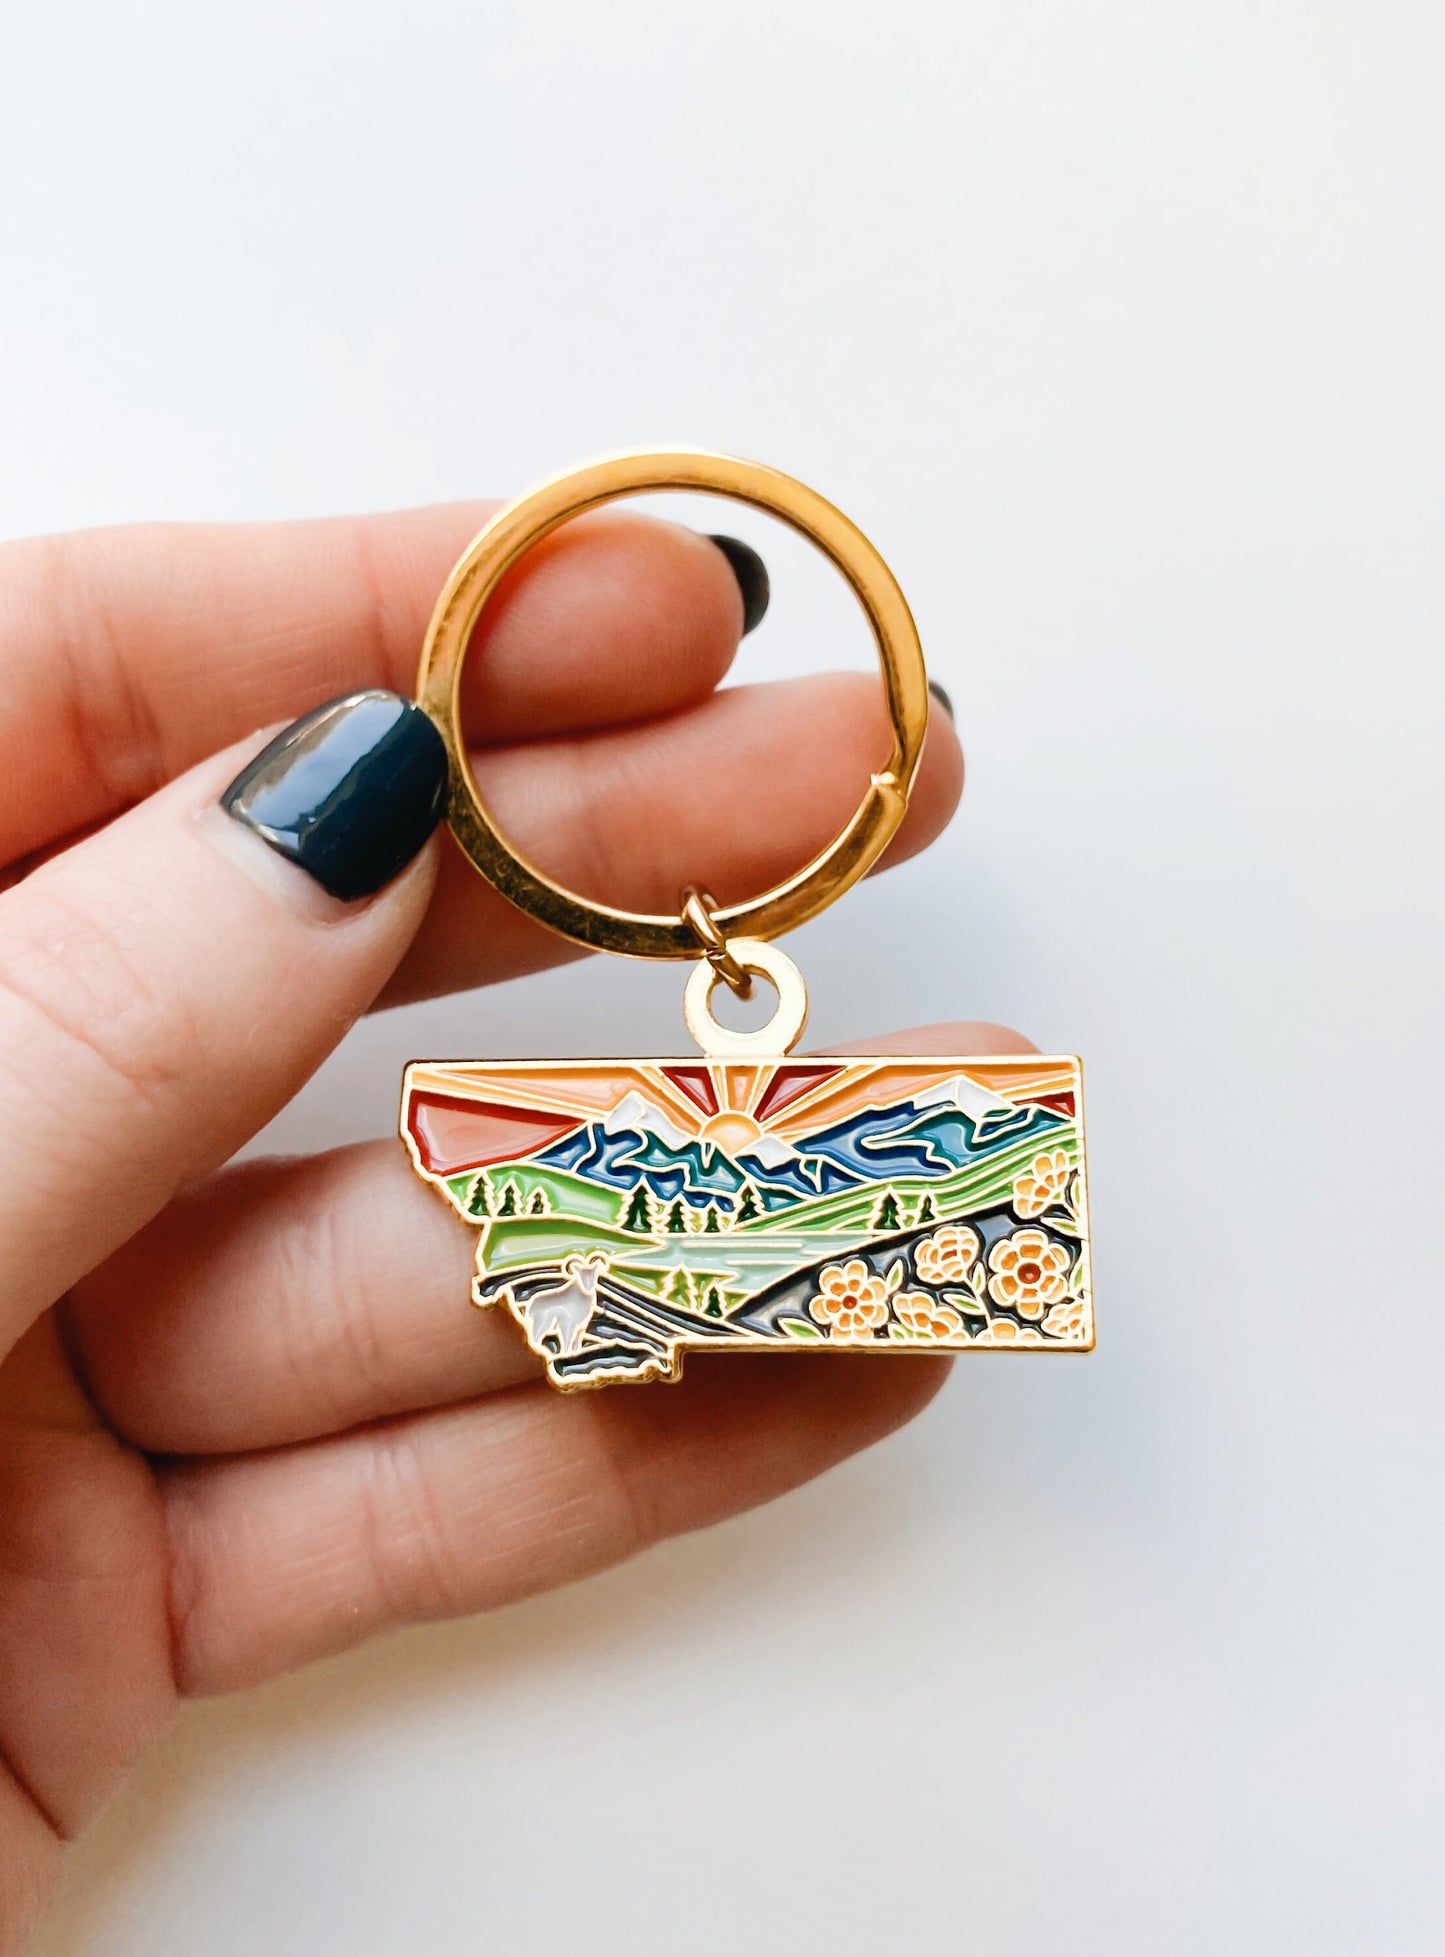 Montana Gold Enamel Keychain | Montana State Key Ring | Soft Enamel Illustrated State Keychain 1.5"